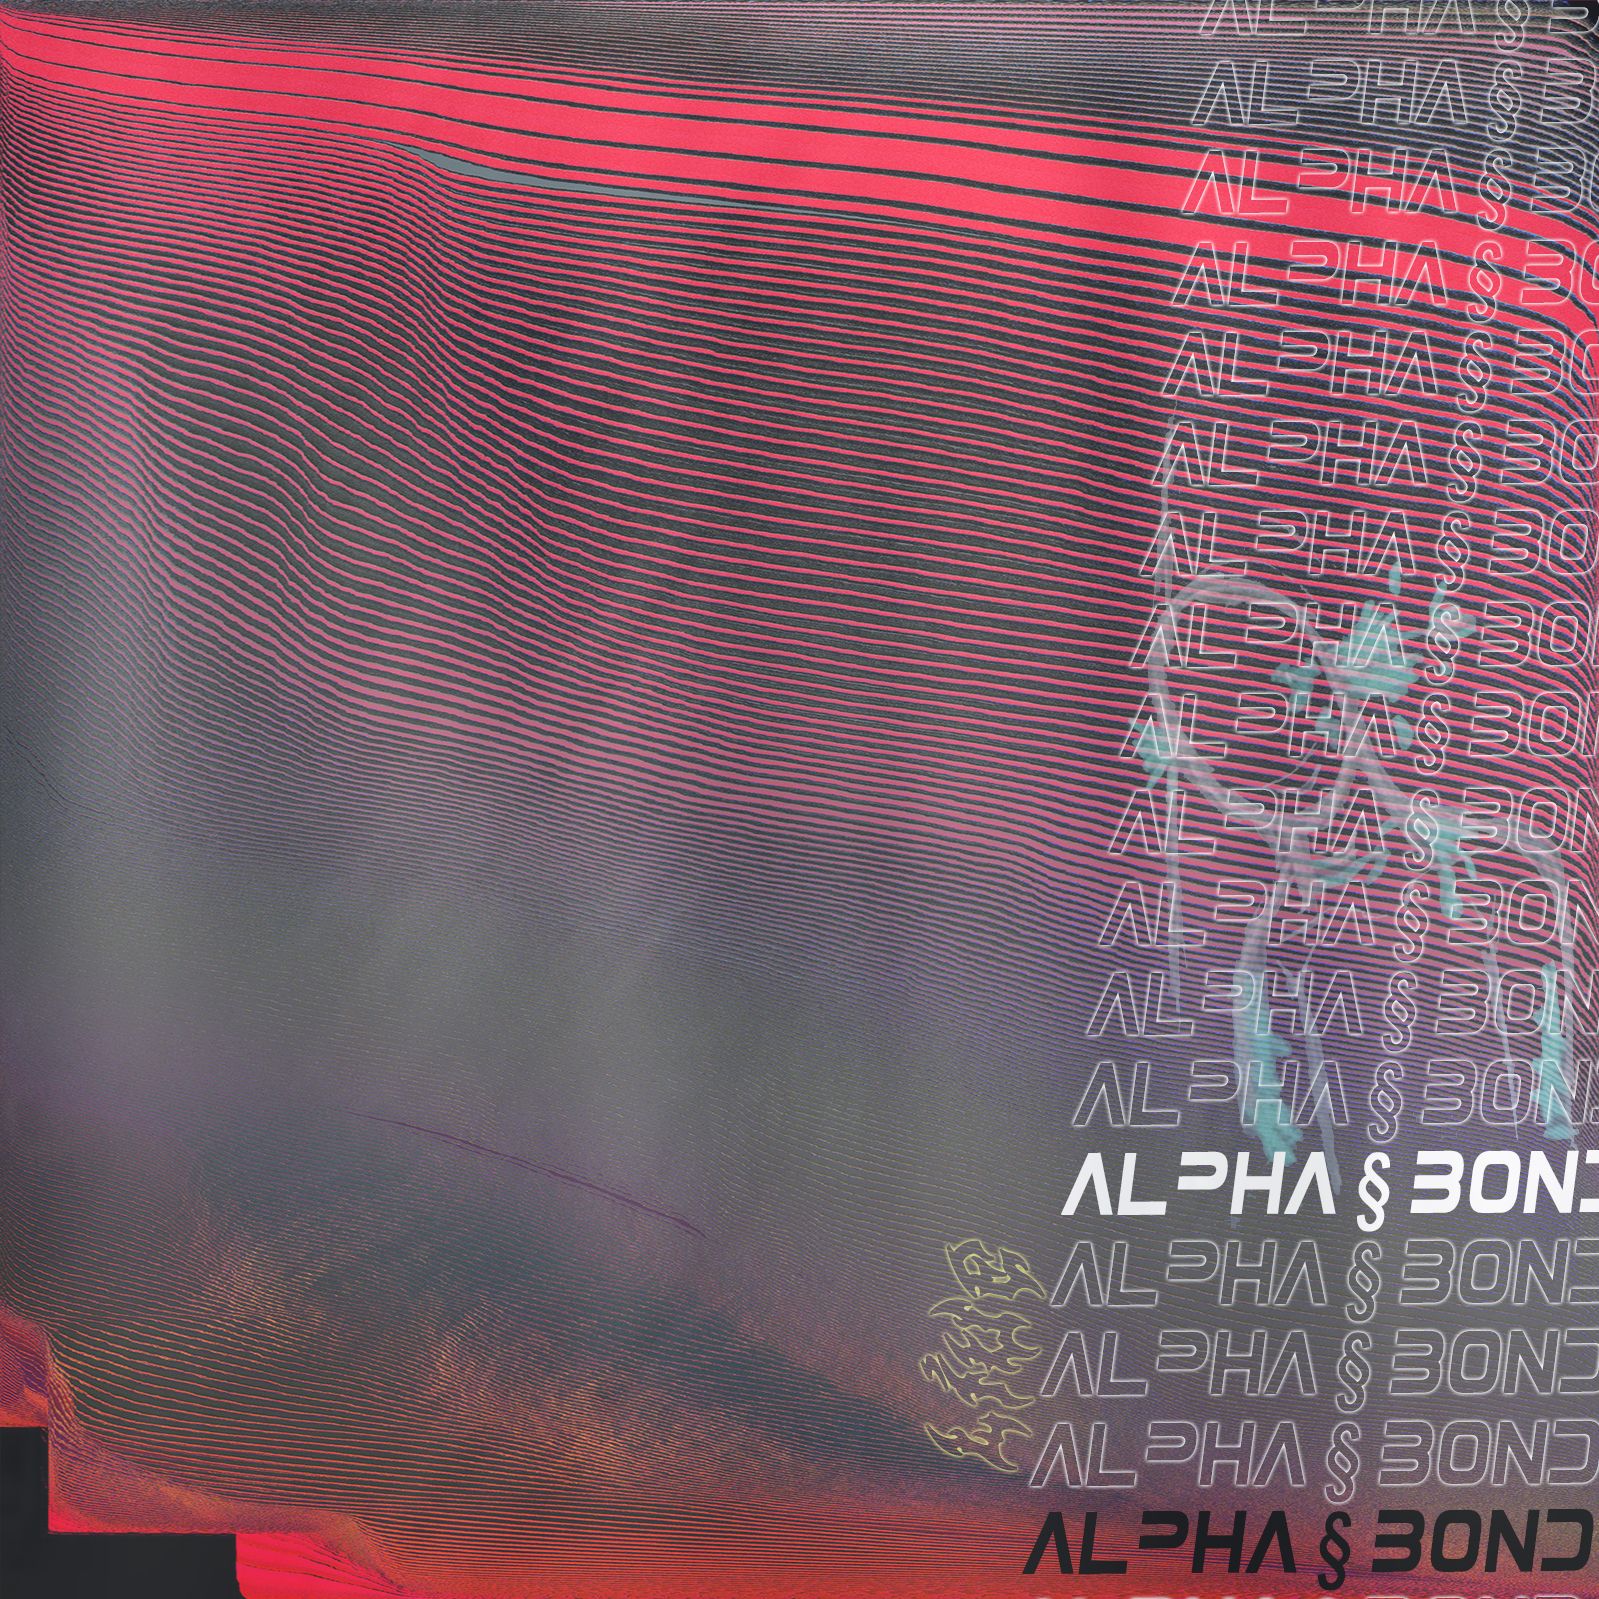 Download alpha § bond